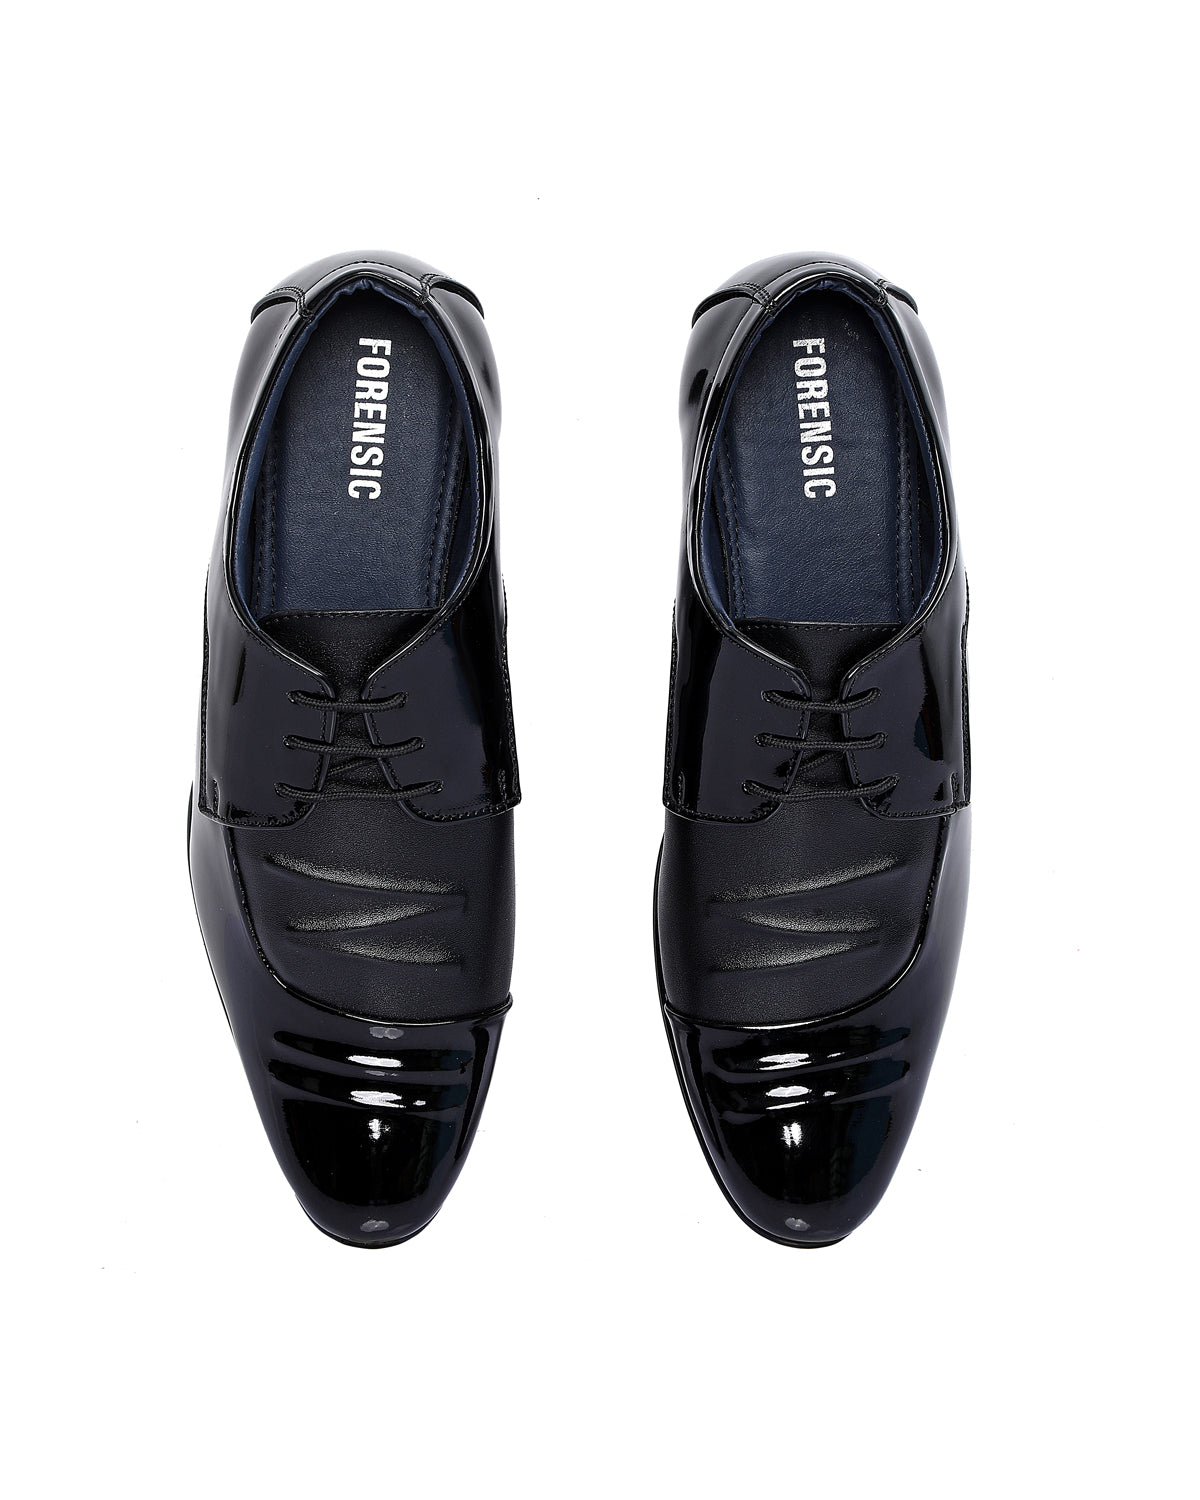 Dual Tone Wrinkle Leather Shoes - Black